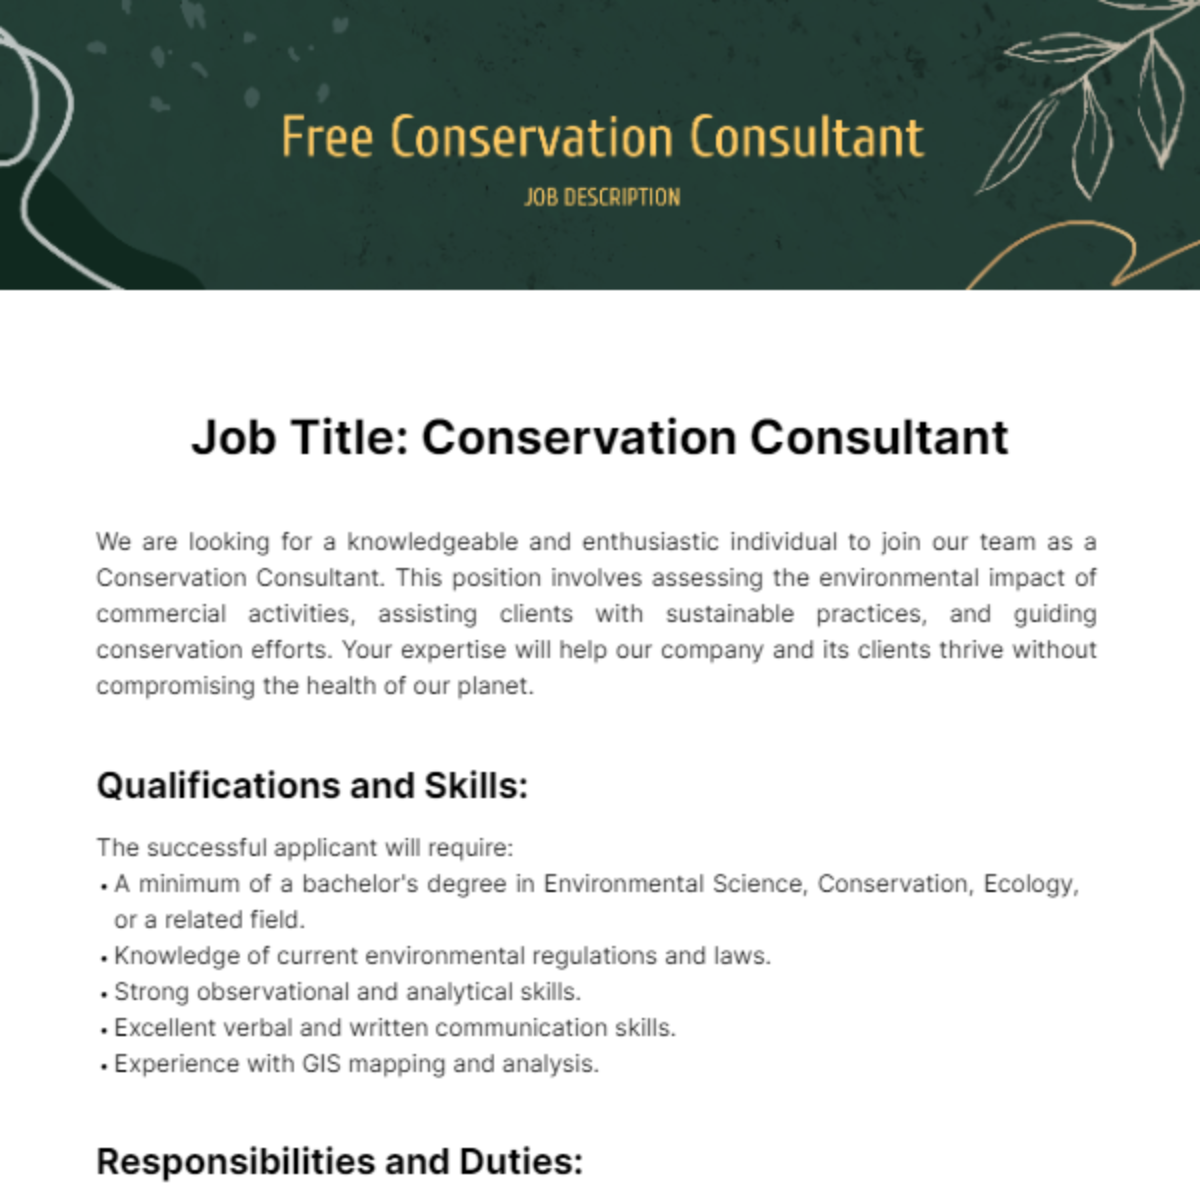 Free Conservation Consultant Job Description Template